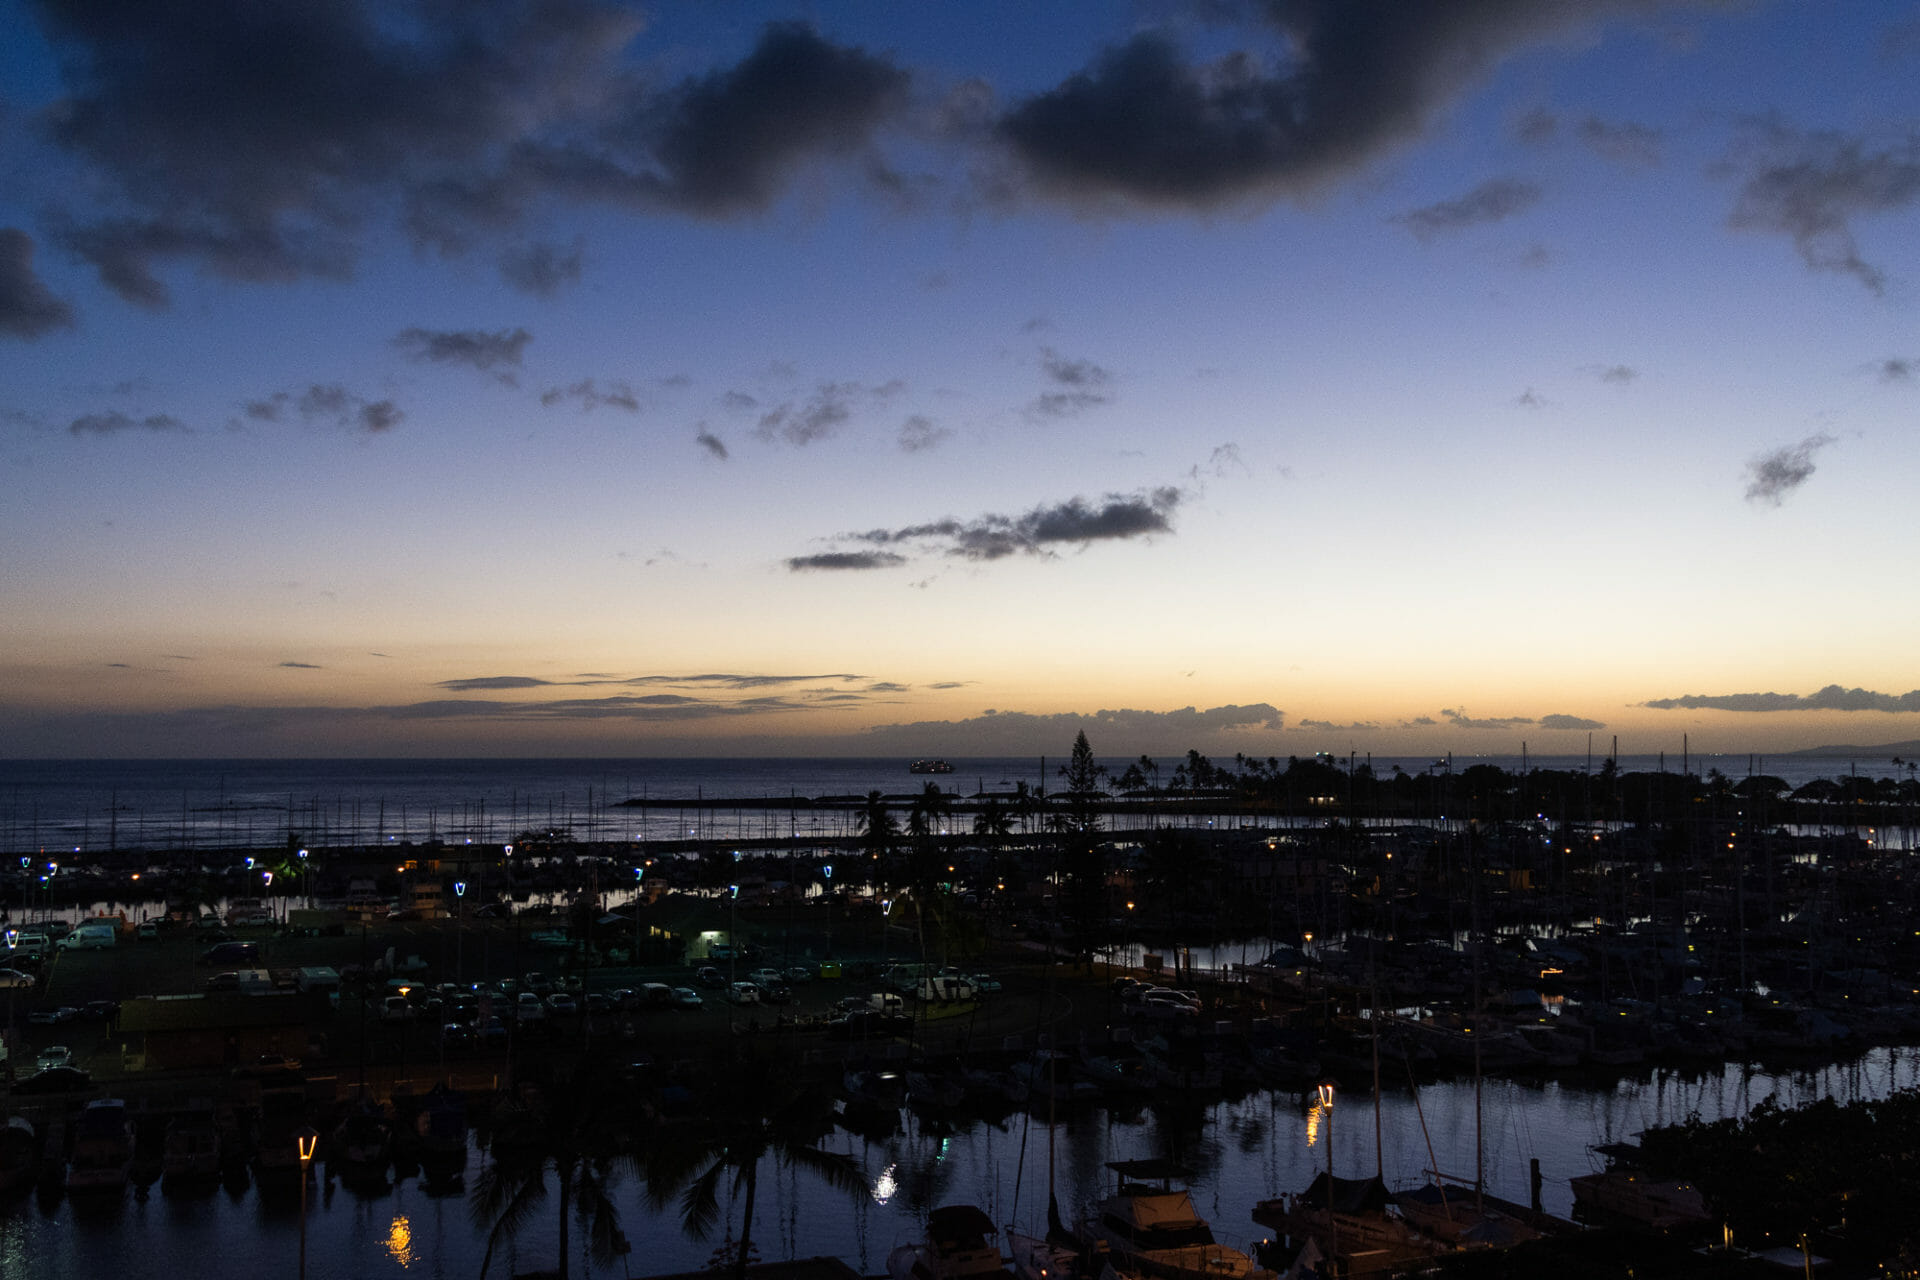 Ala Wai Harbor with sunset past